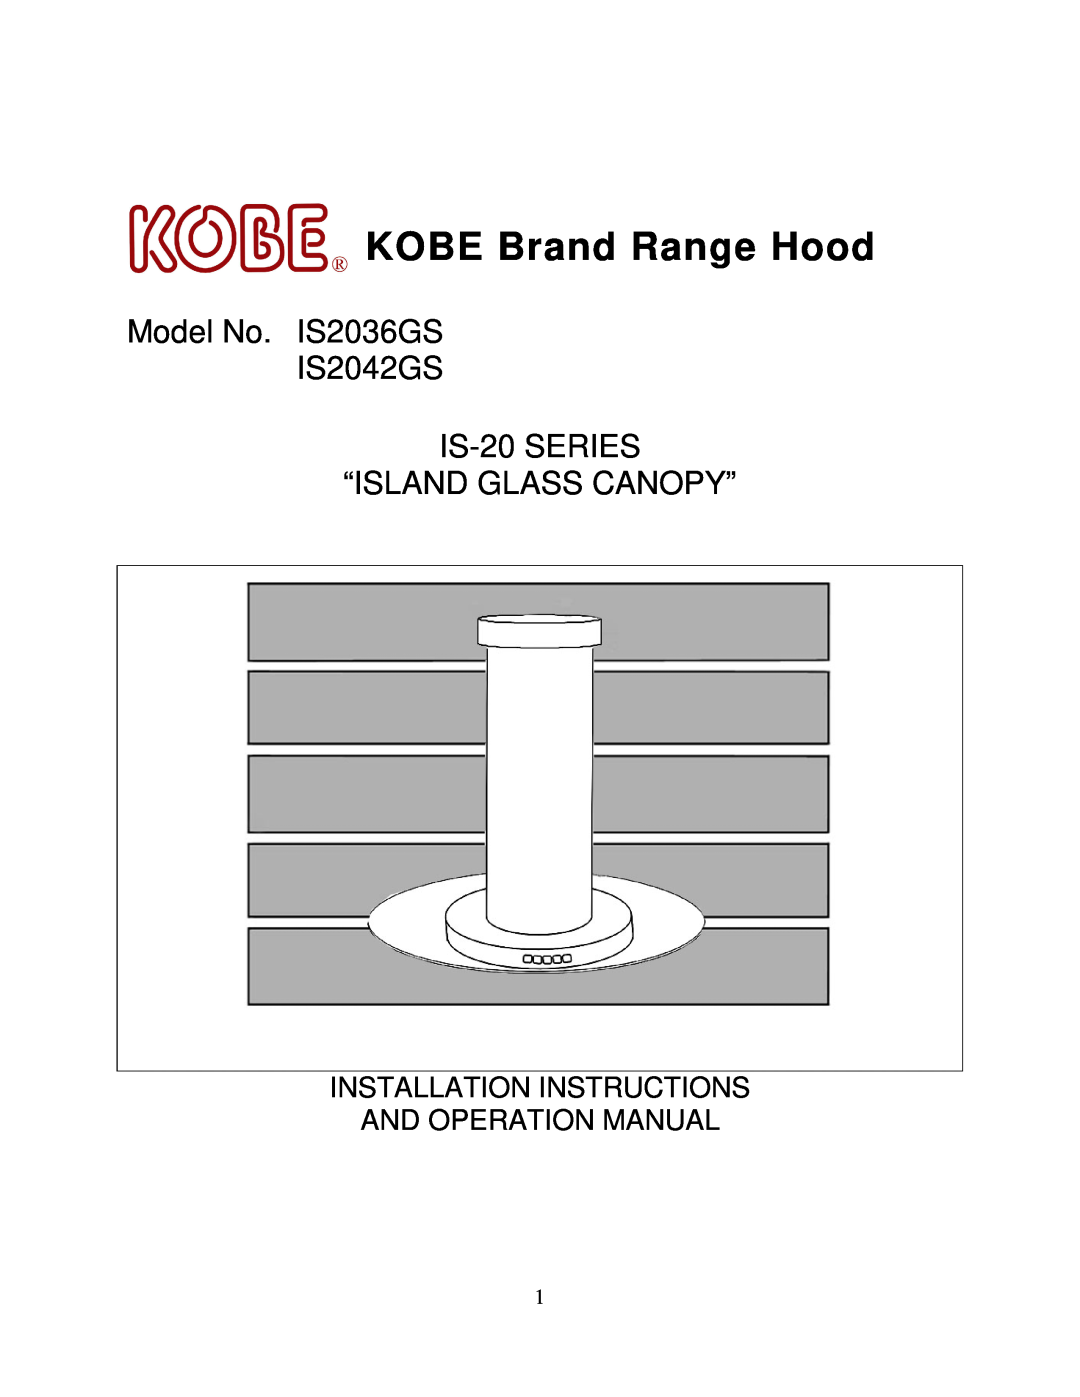 Kobe Range Hoods manual KOBE Brand Range Hood, Model No. IS2036GS IS2042GS IS-20 SERIES “ISLAND GLASS CANOPY” 